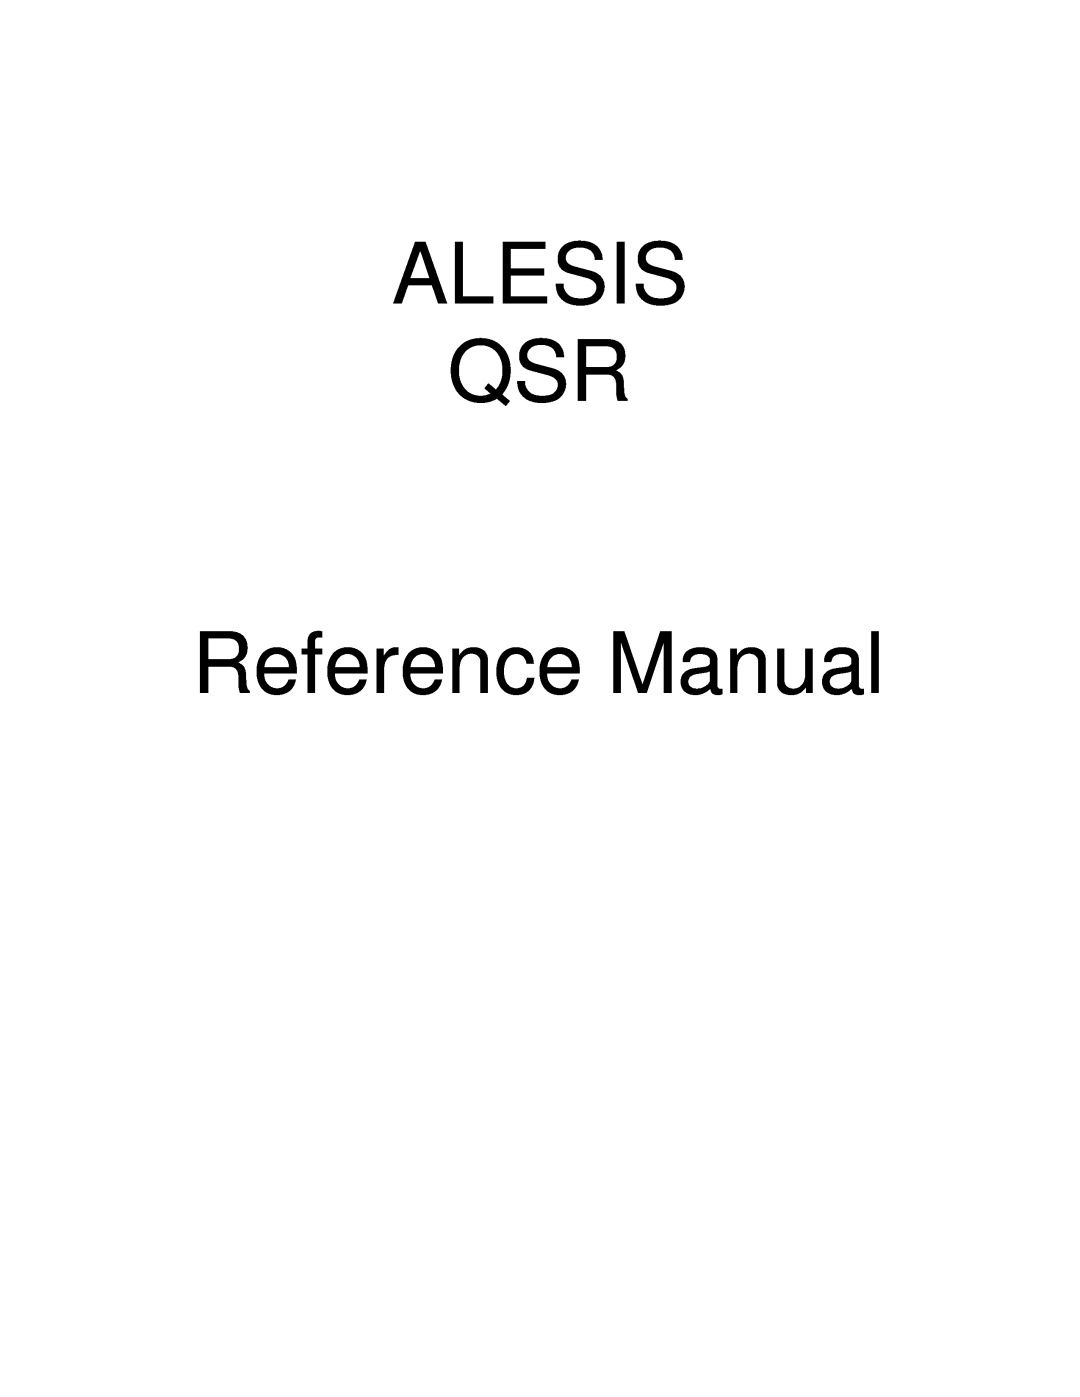 Alesis QSR 64 manual ALESIS QSR Reference Manual 